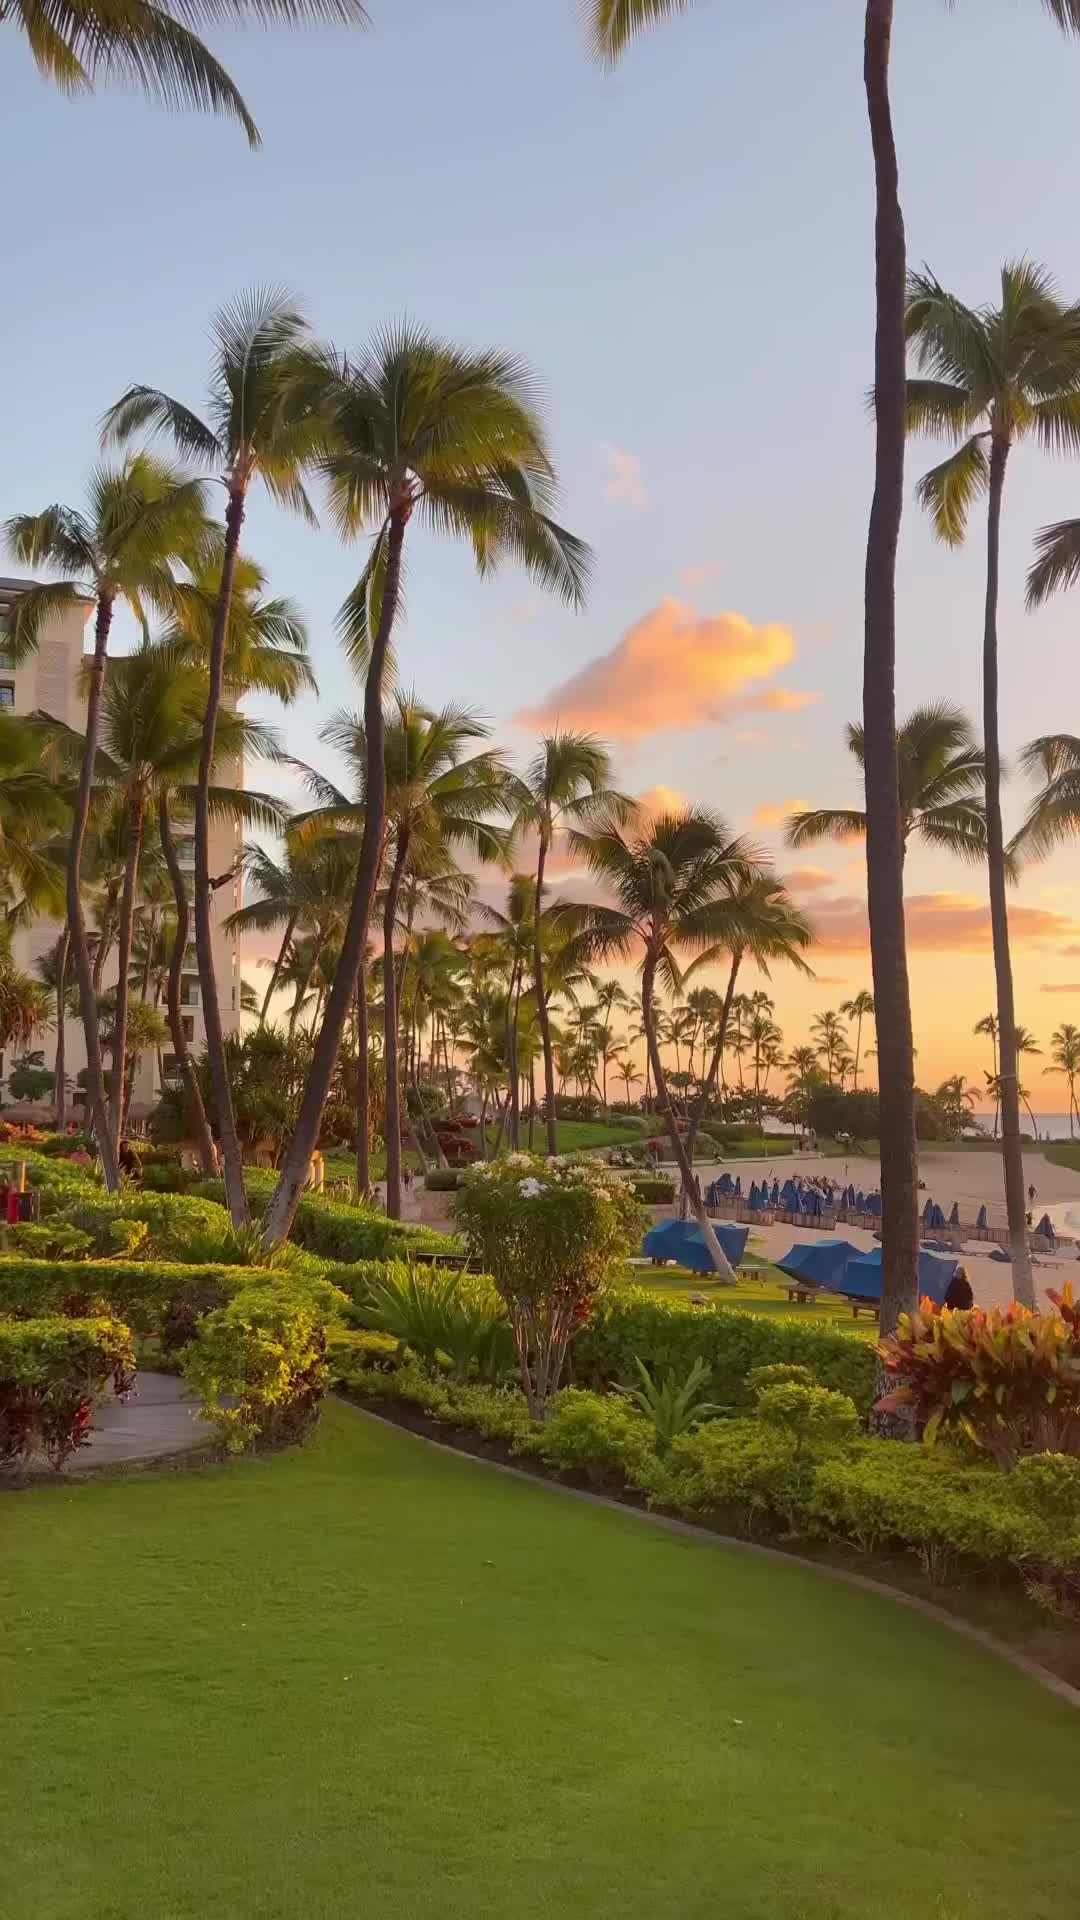 Experiencing a Stunning Hawaiian Sunset at Marriott